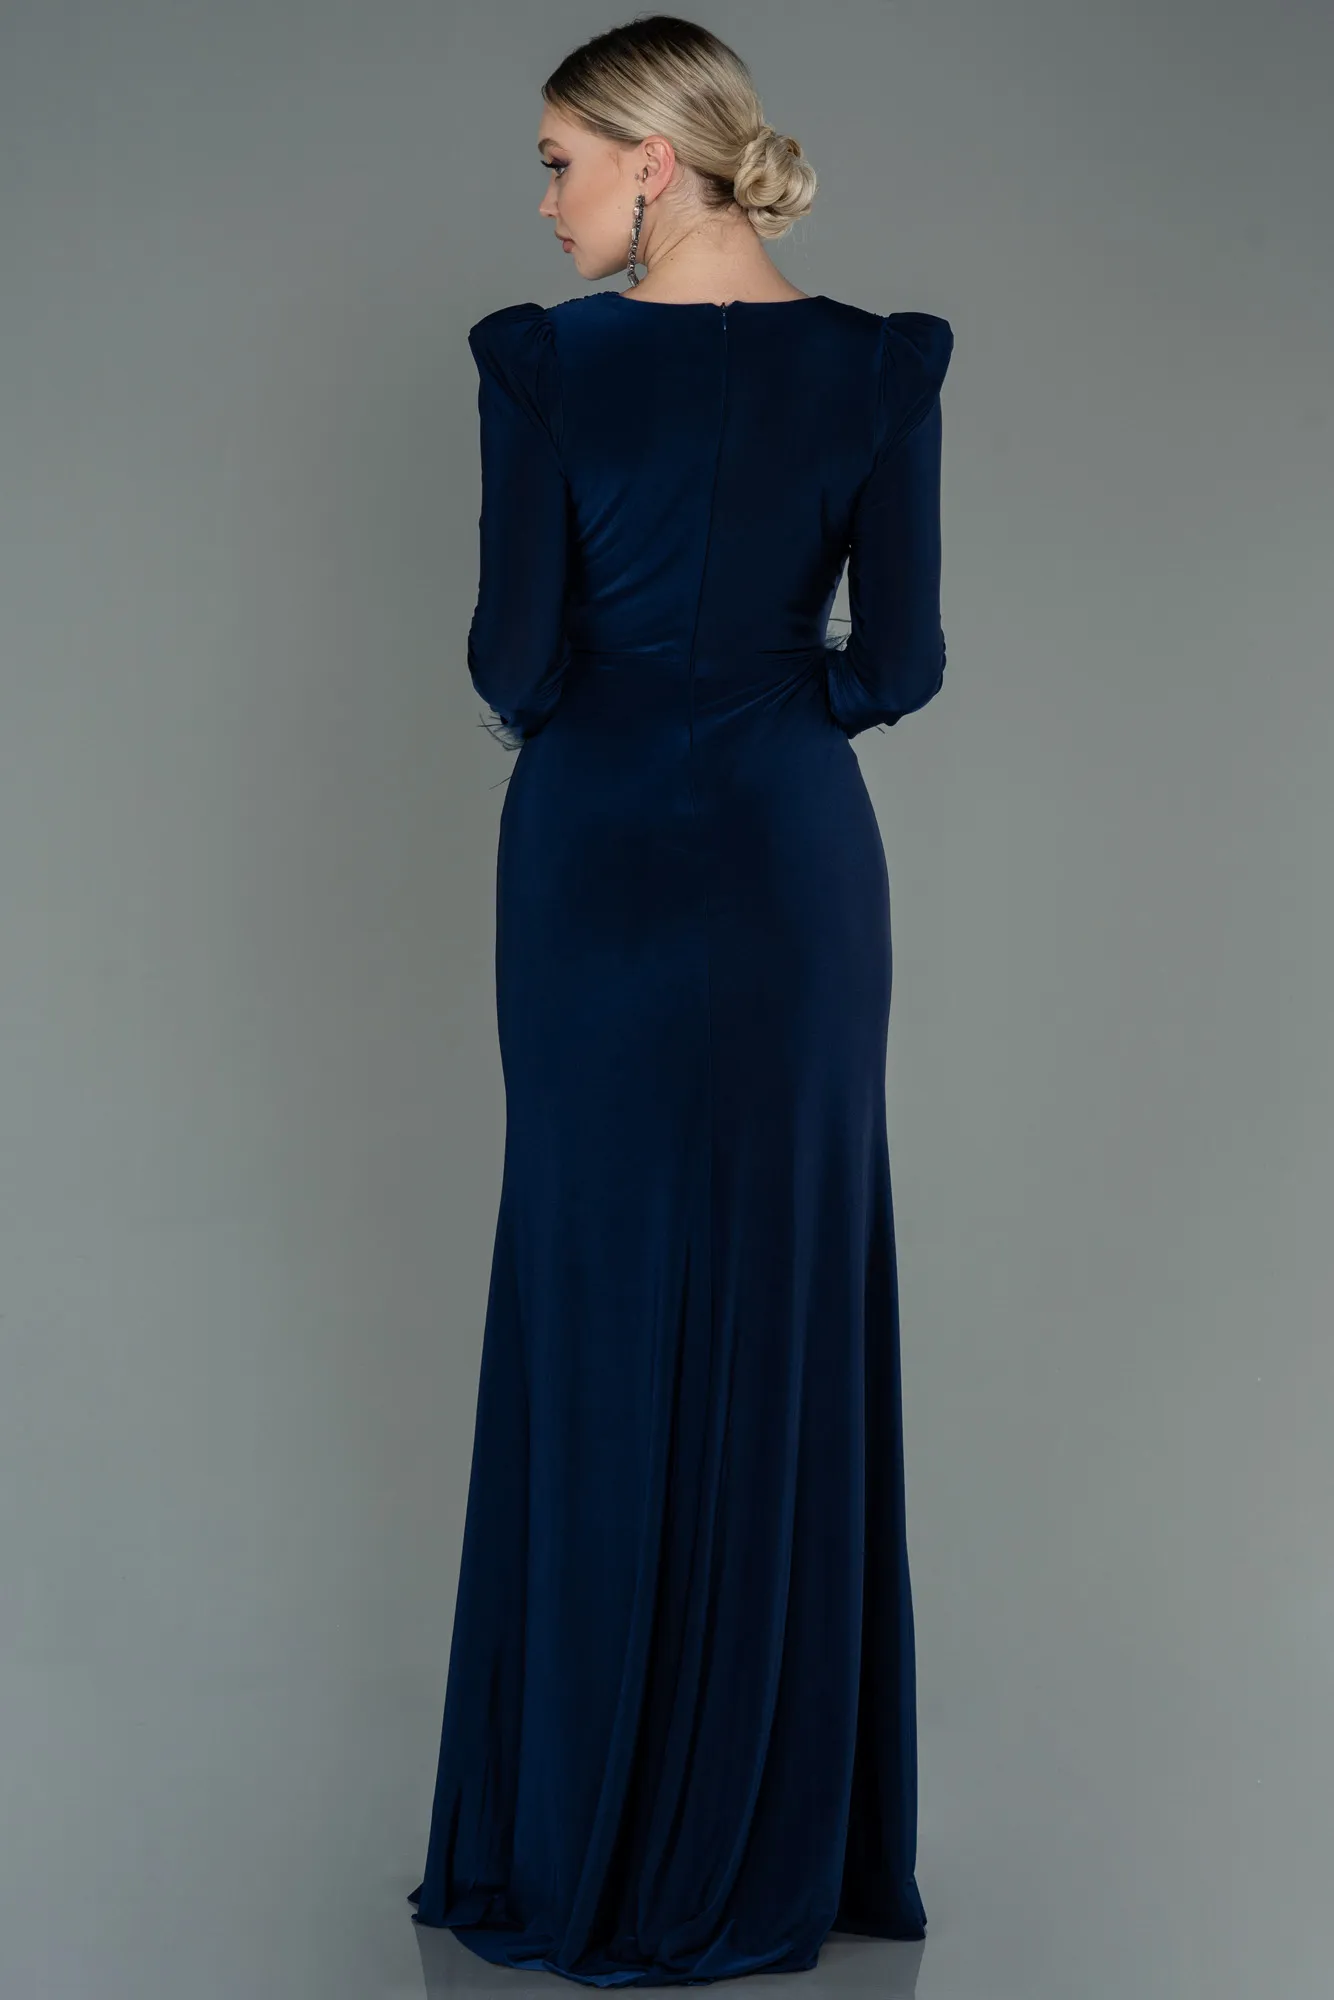 Navy Blue-Long Evening Dress ABU2804